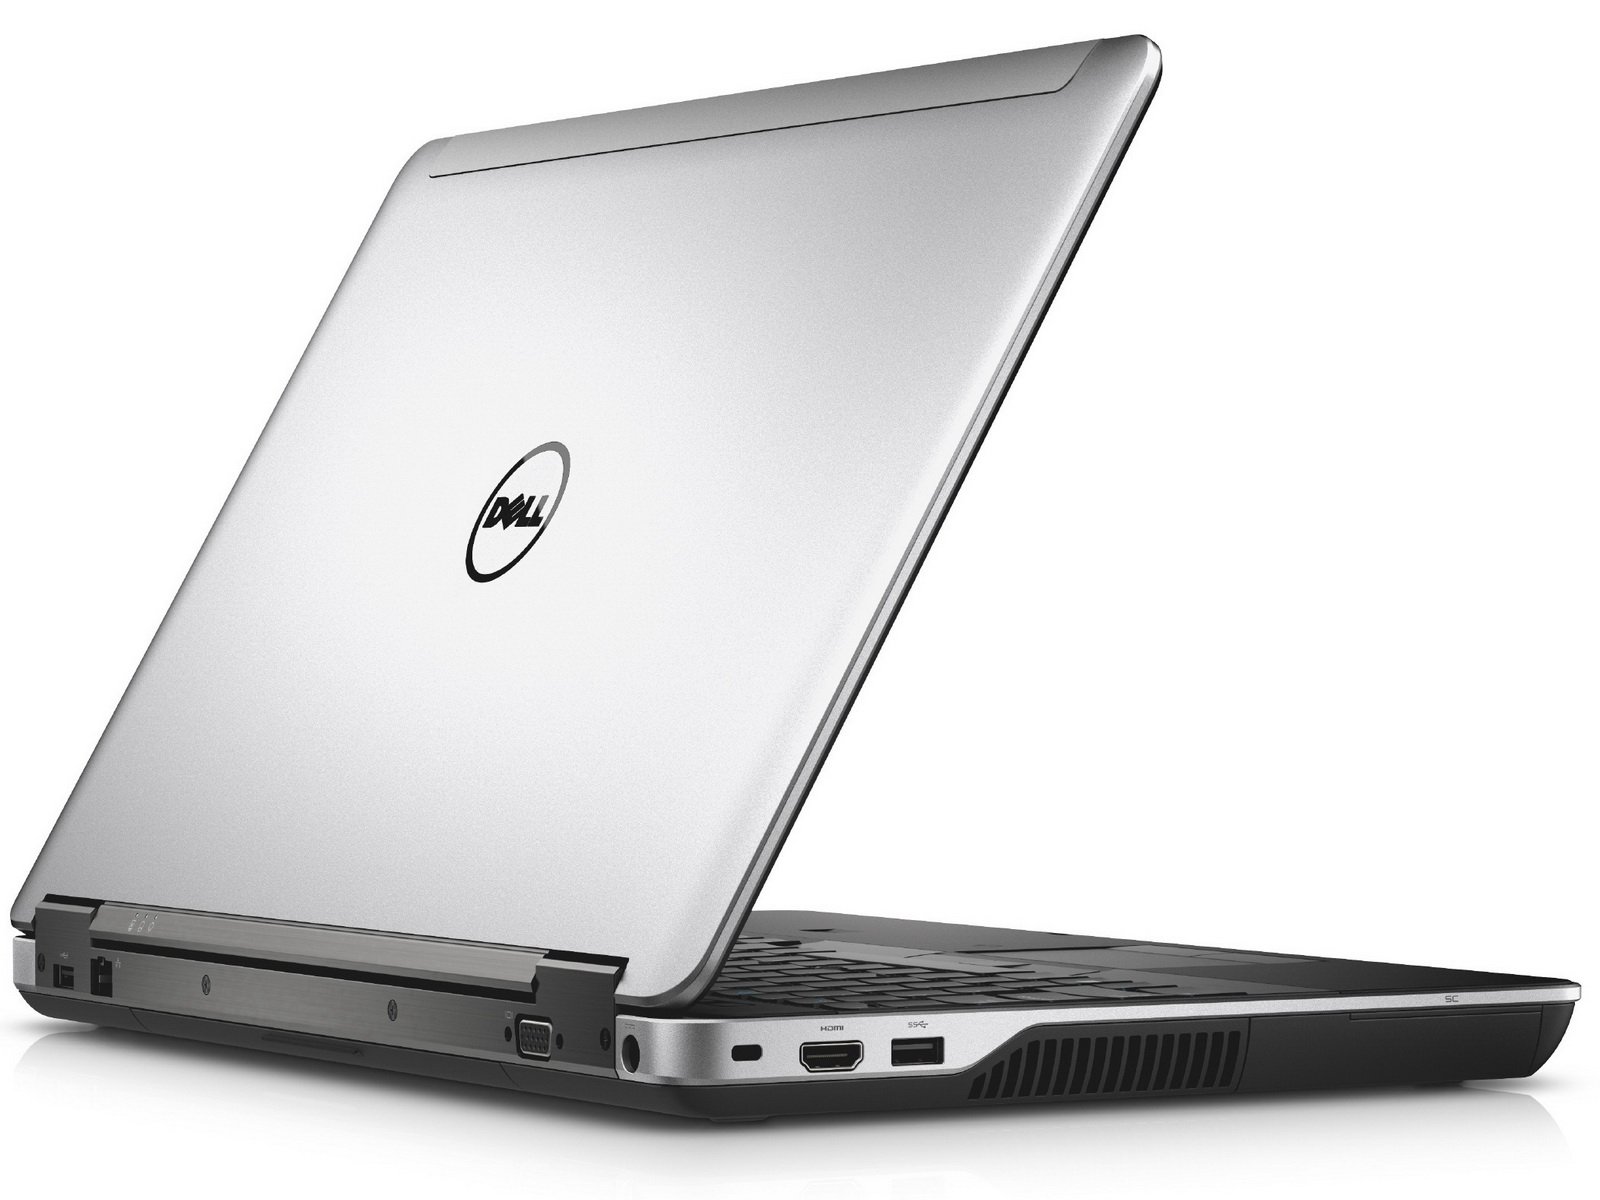 Dell Latitude E6540 15.6inch Laptop, Core i7-4800MQ 2.7GHz, 16GB Ram, 500GB SSD, DVDRW, Windows 10 Pro 64bit, Webcam (Renewed)